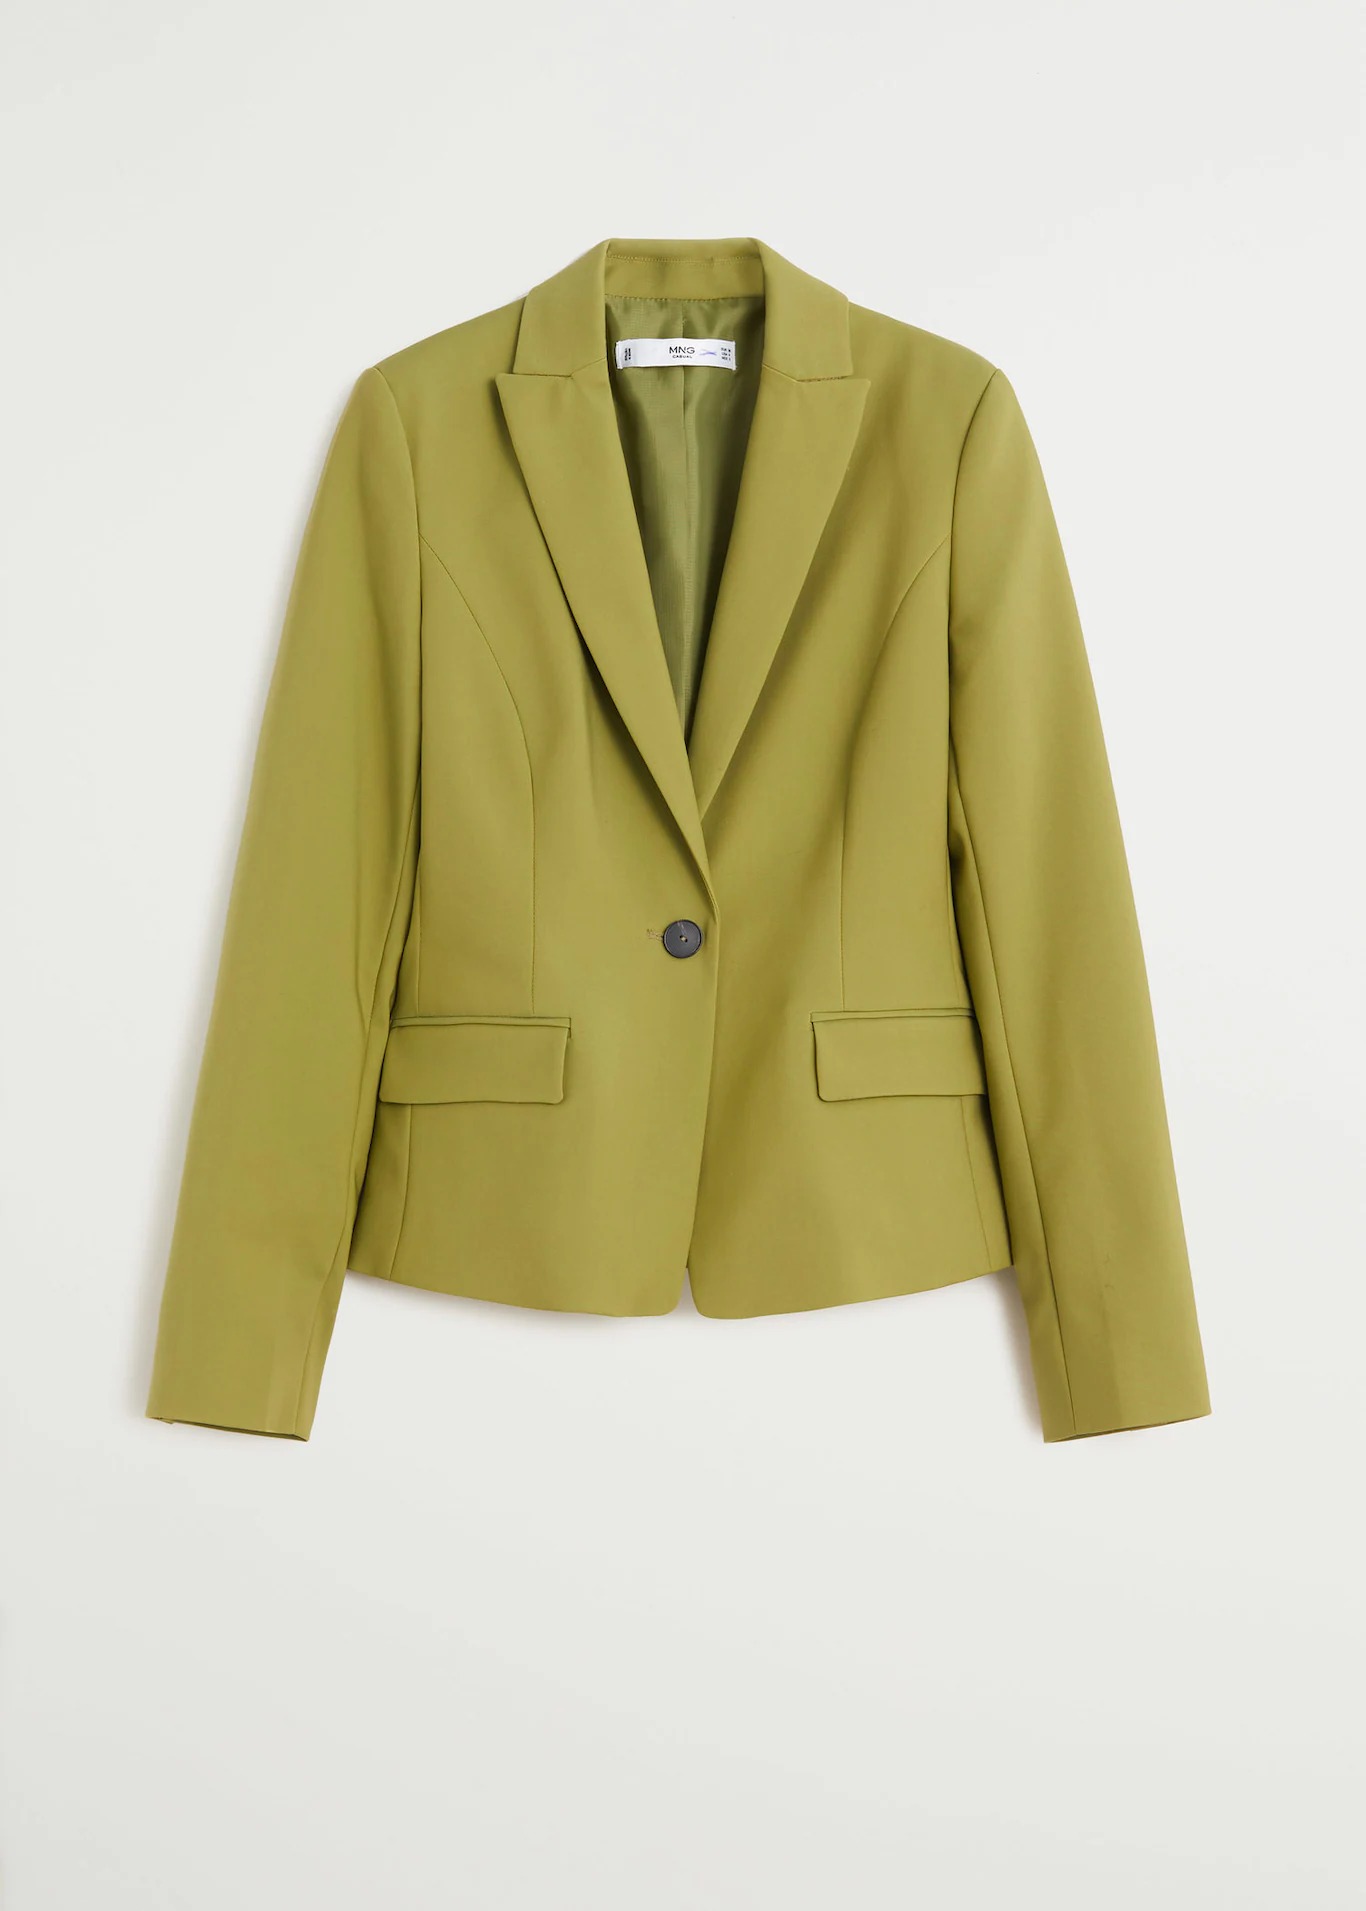 Mango 77092888 Structured suit blazer Olive green size 38(EU)7